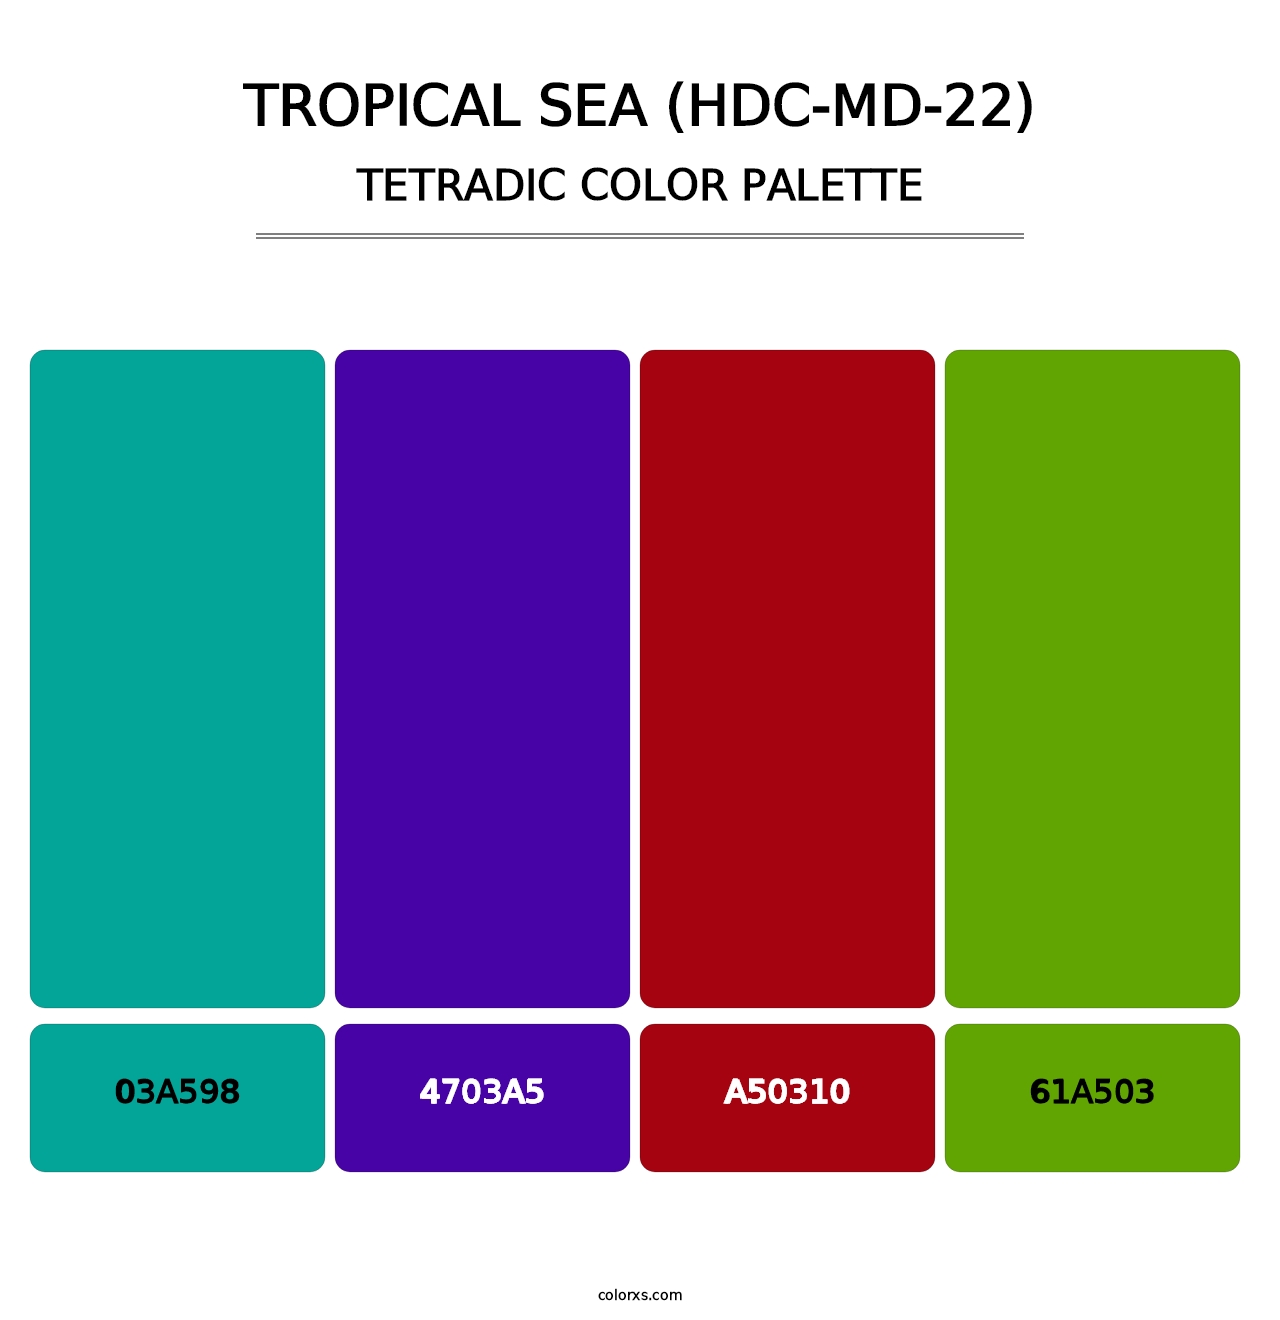 Tropical Sea (HDC-MD-22) - Tetradic Color Palette